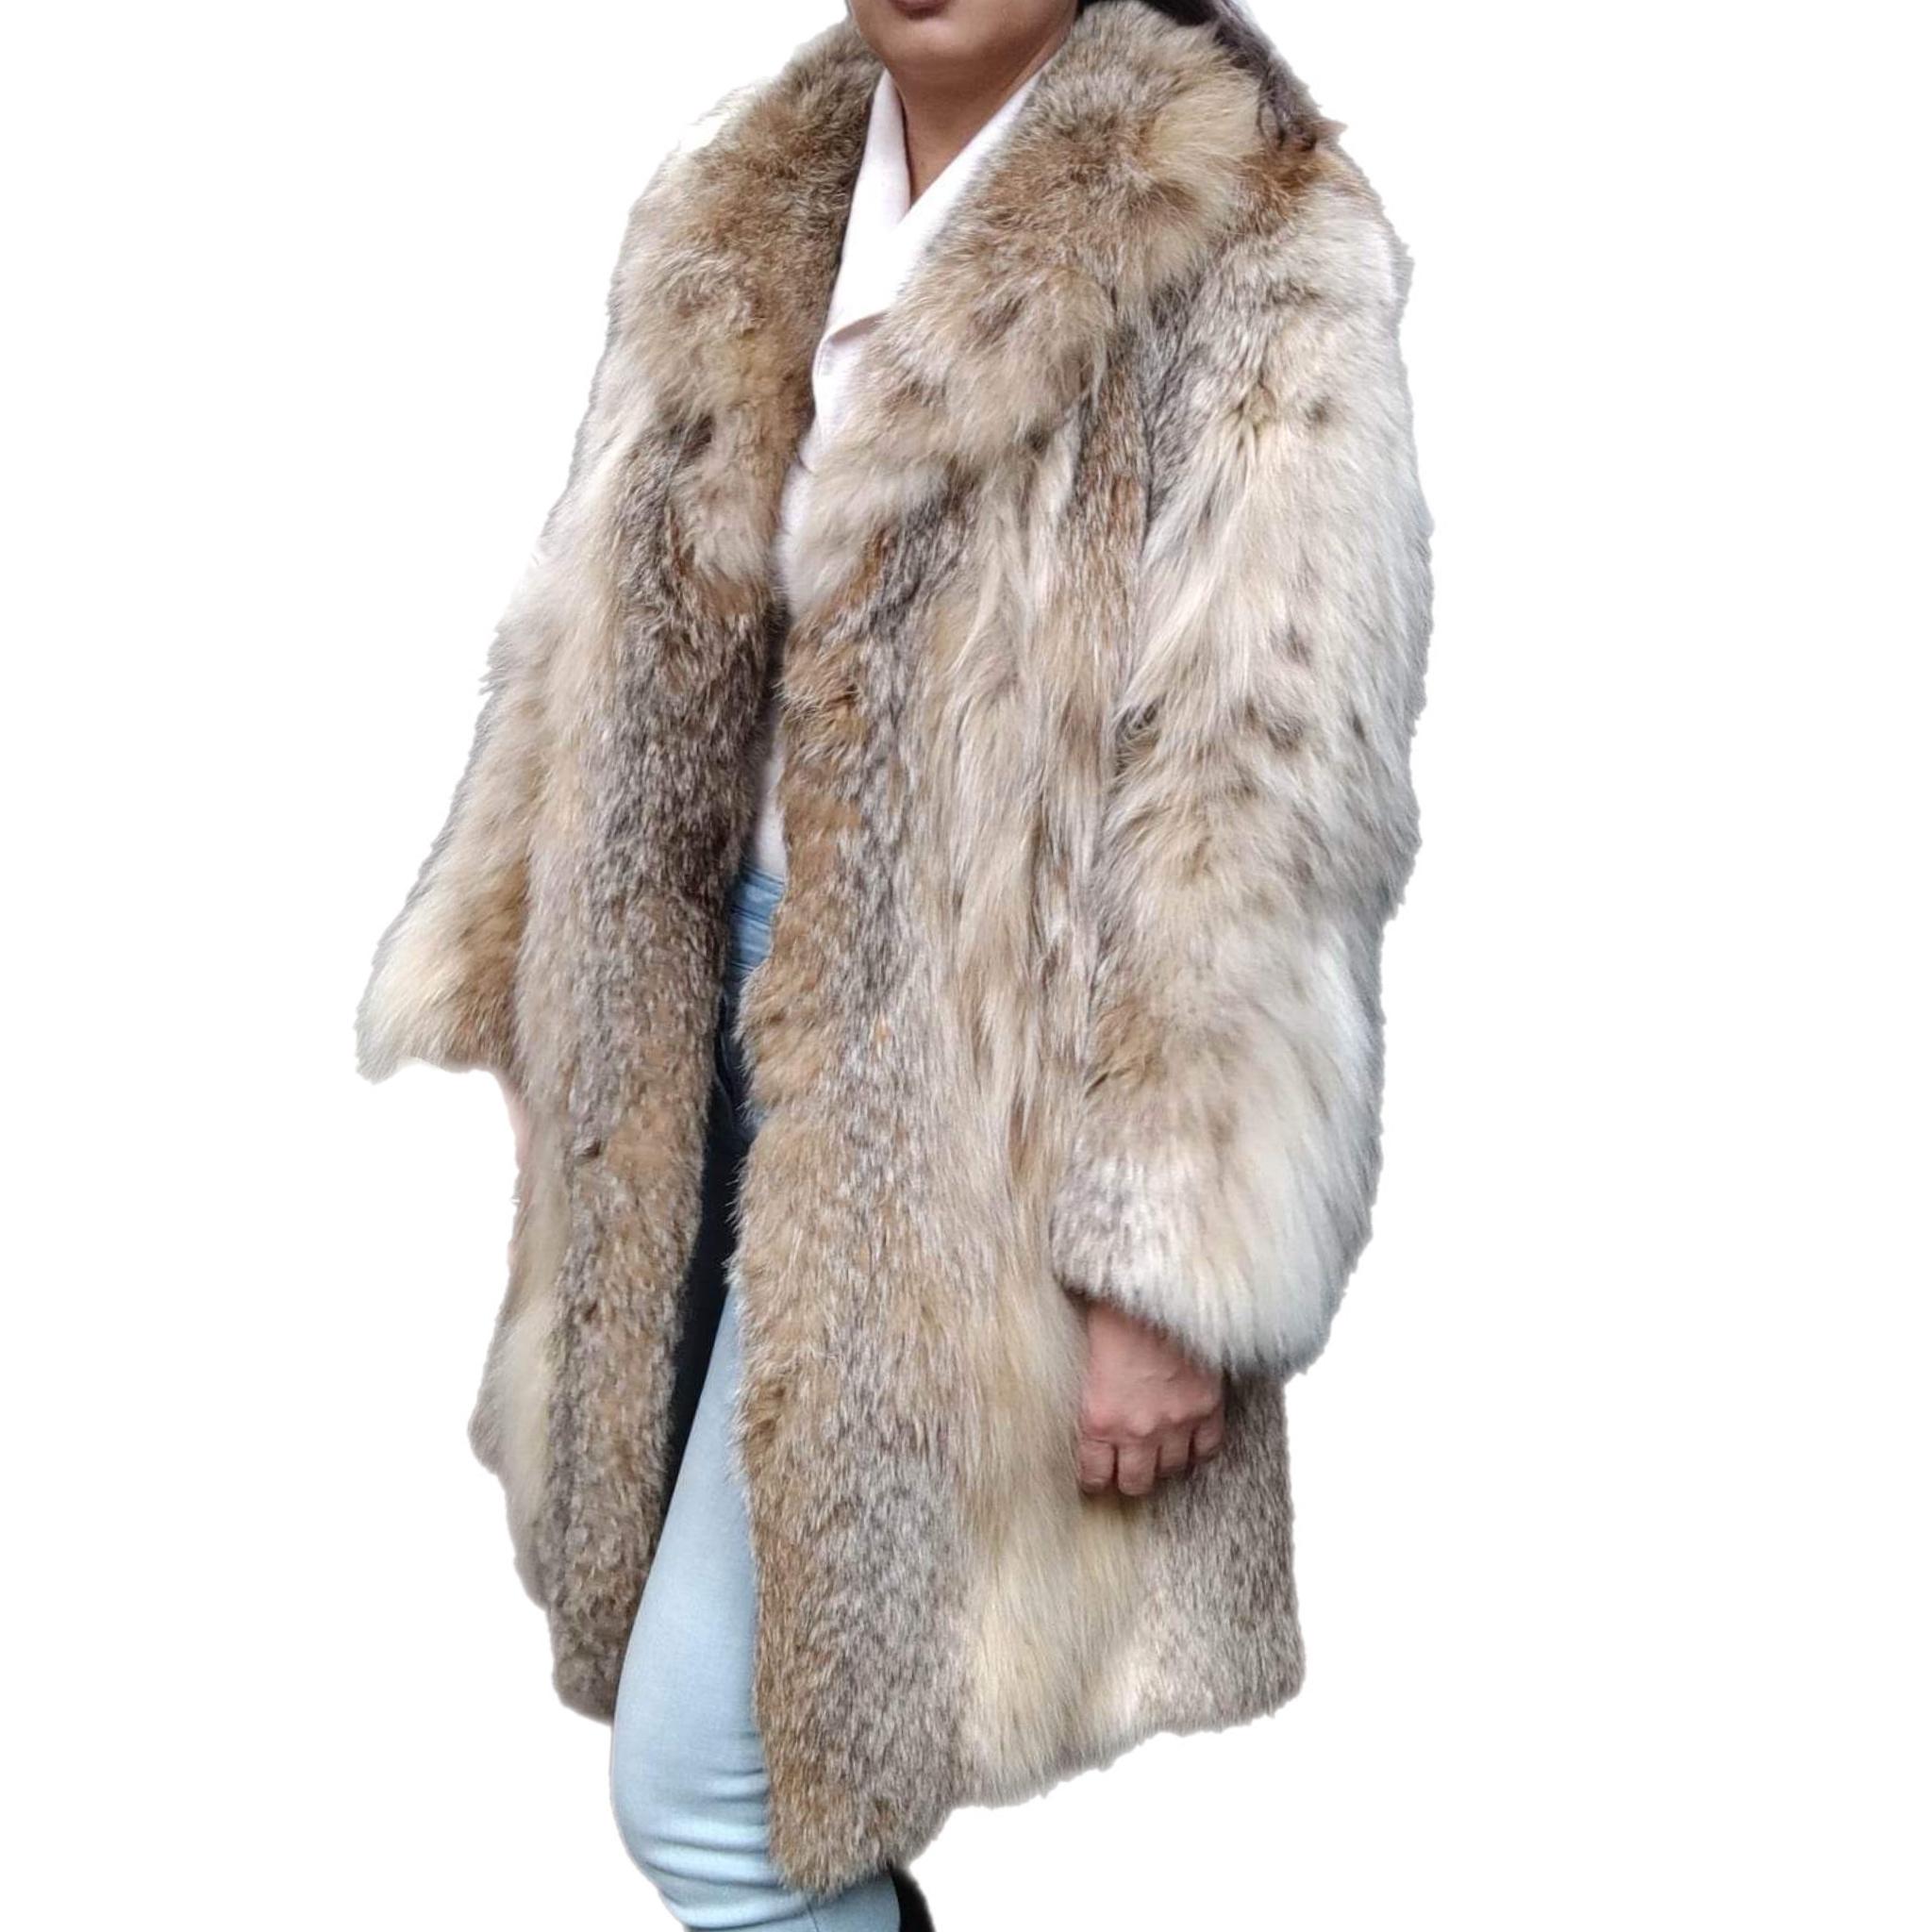 Women's Brand new lightweight lynx fur coat size 8 S